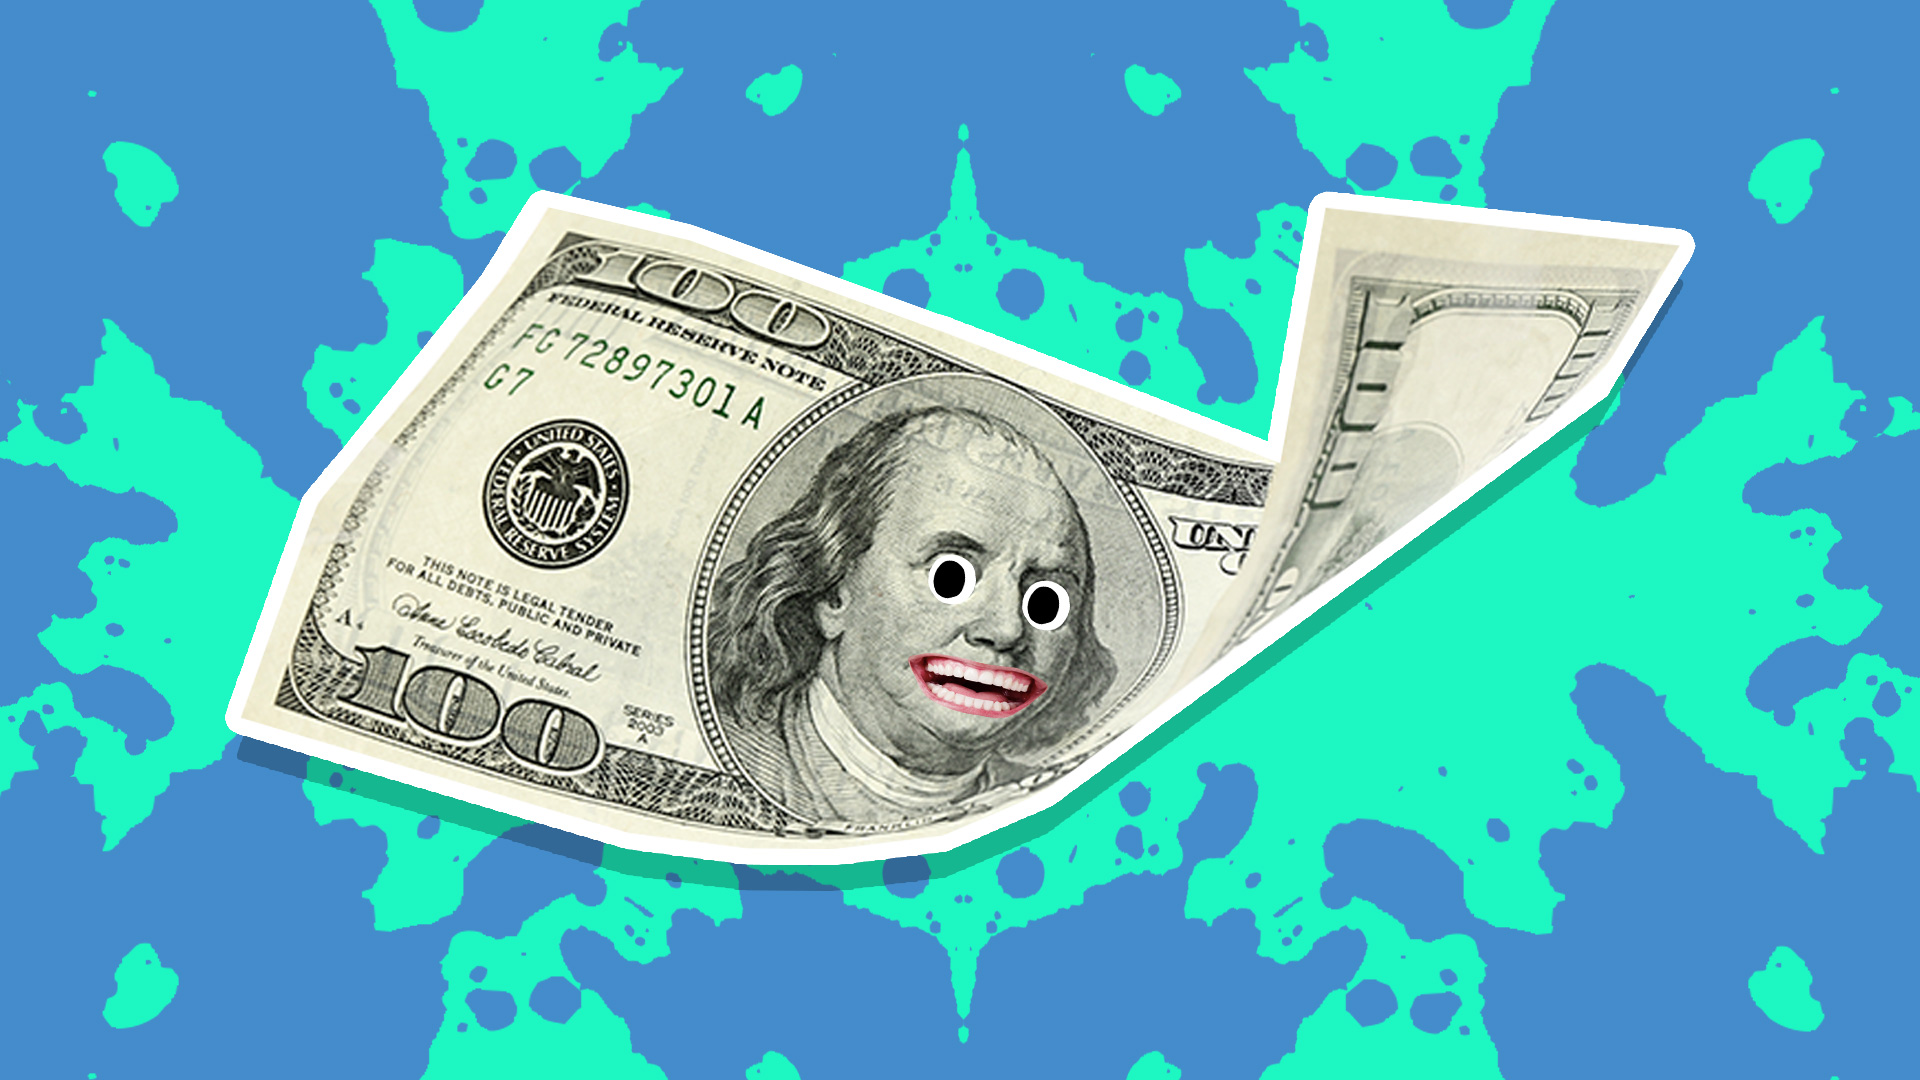 A 100 dollar bill featuring the face of Benjamin Franklin